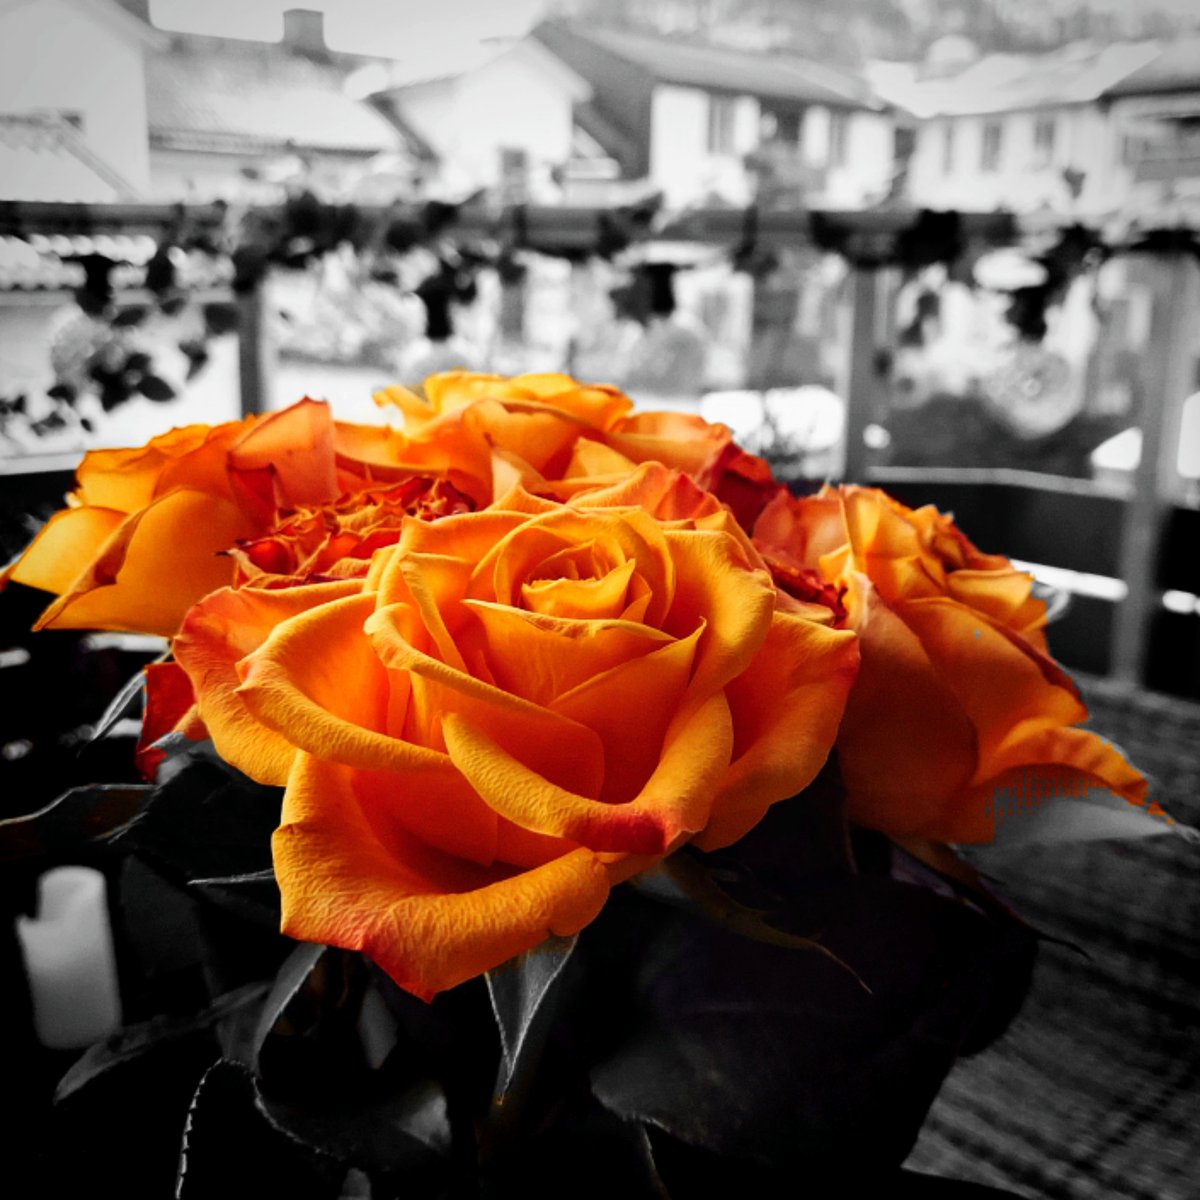 #BW #flower and #colorpop 🙂 @Nokia @NokiaMobile @hmd_global @HMDGlobal @TheLightCo @teampureview @NokiamobBlog #nokia #nokia9 #photography #phoneography #5lenses #fivelenses #capturedbylight #shotonnokia #nokiamobile #nature #rose